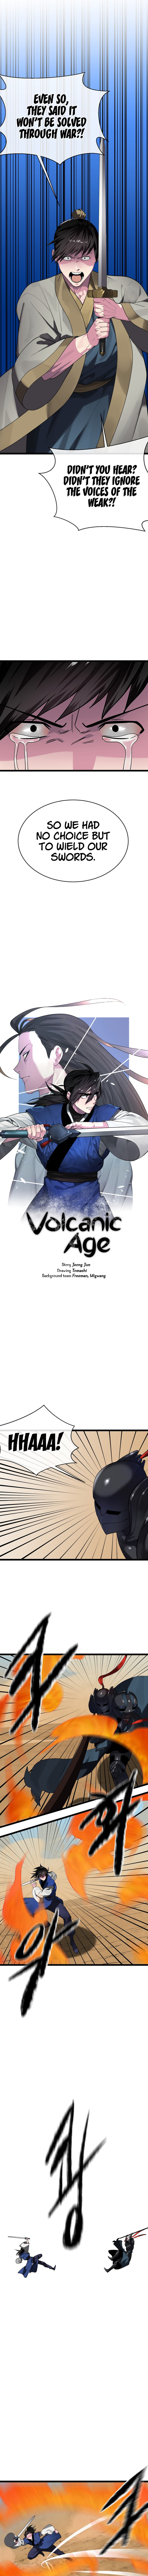 Volcanic Age image